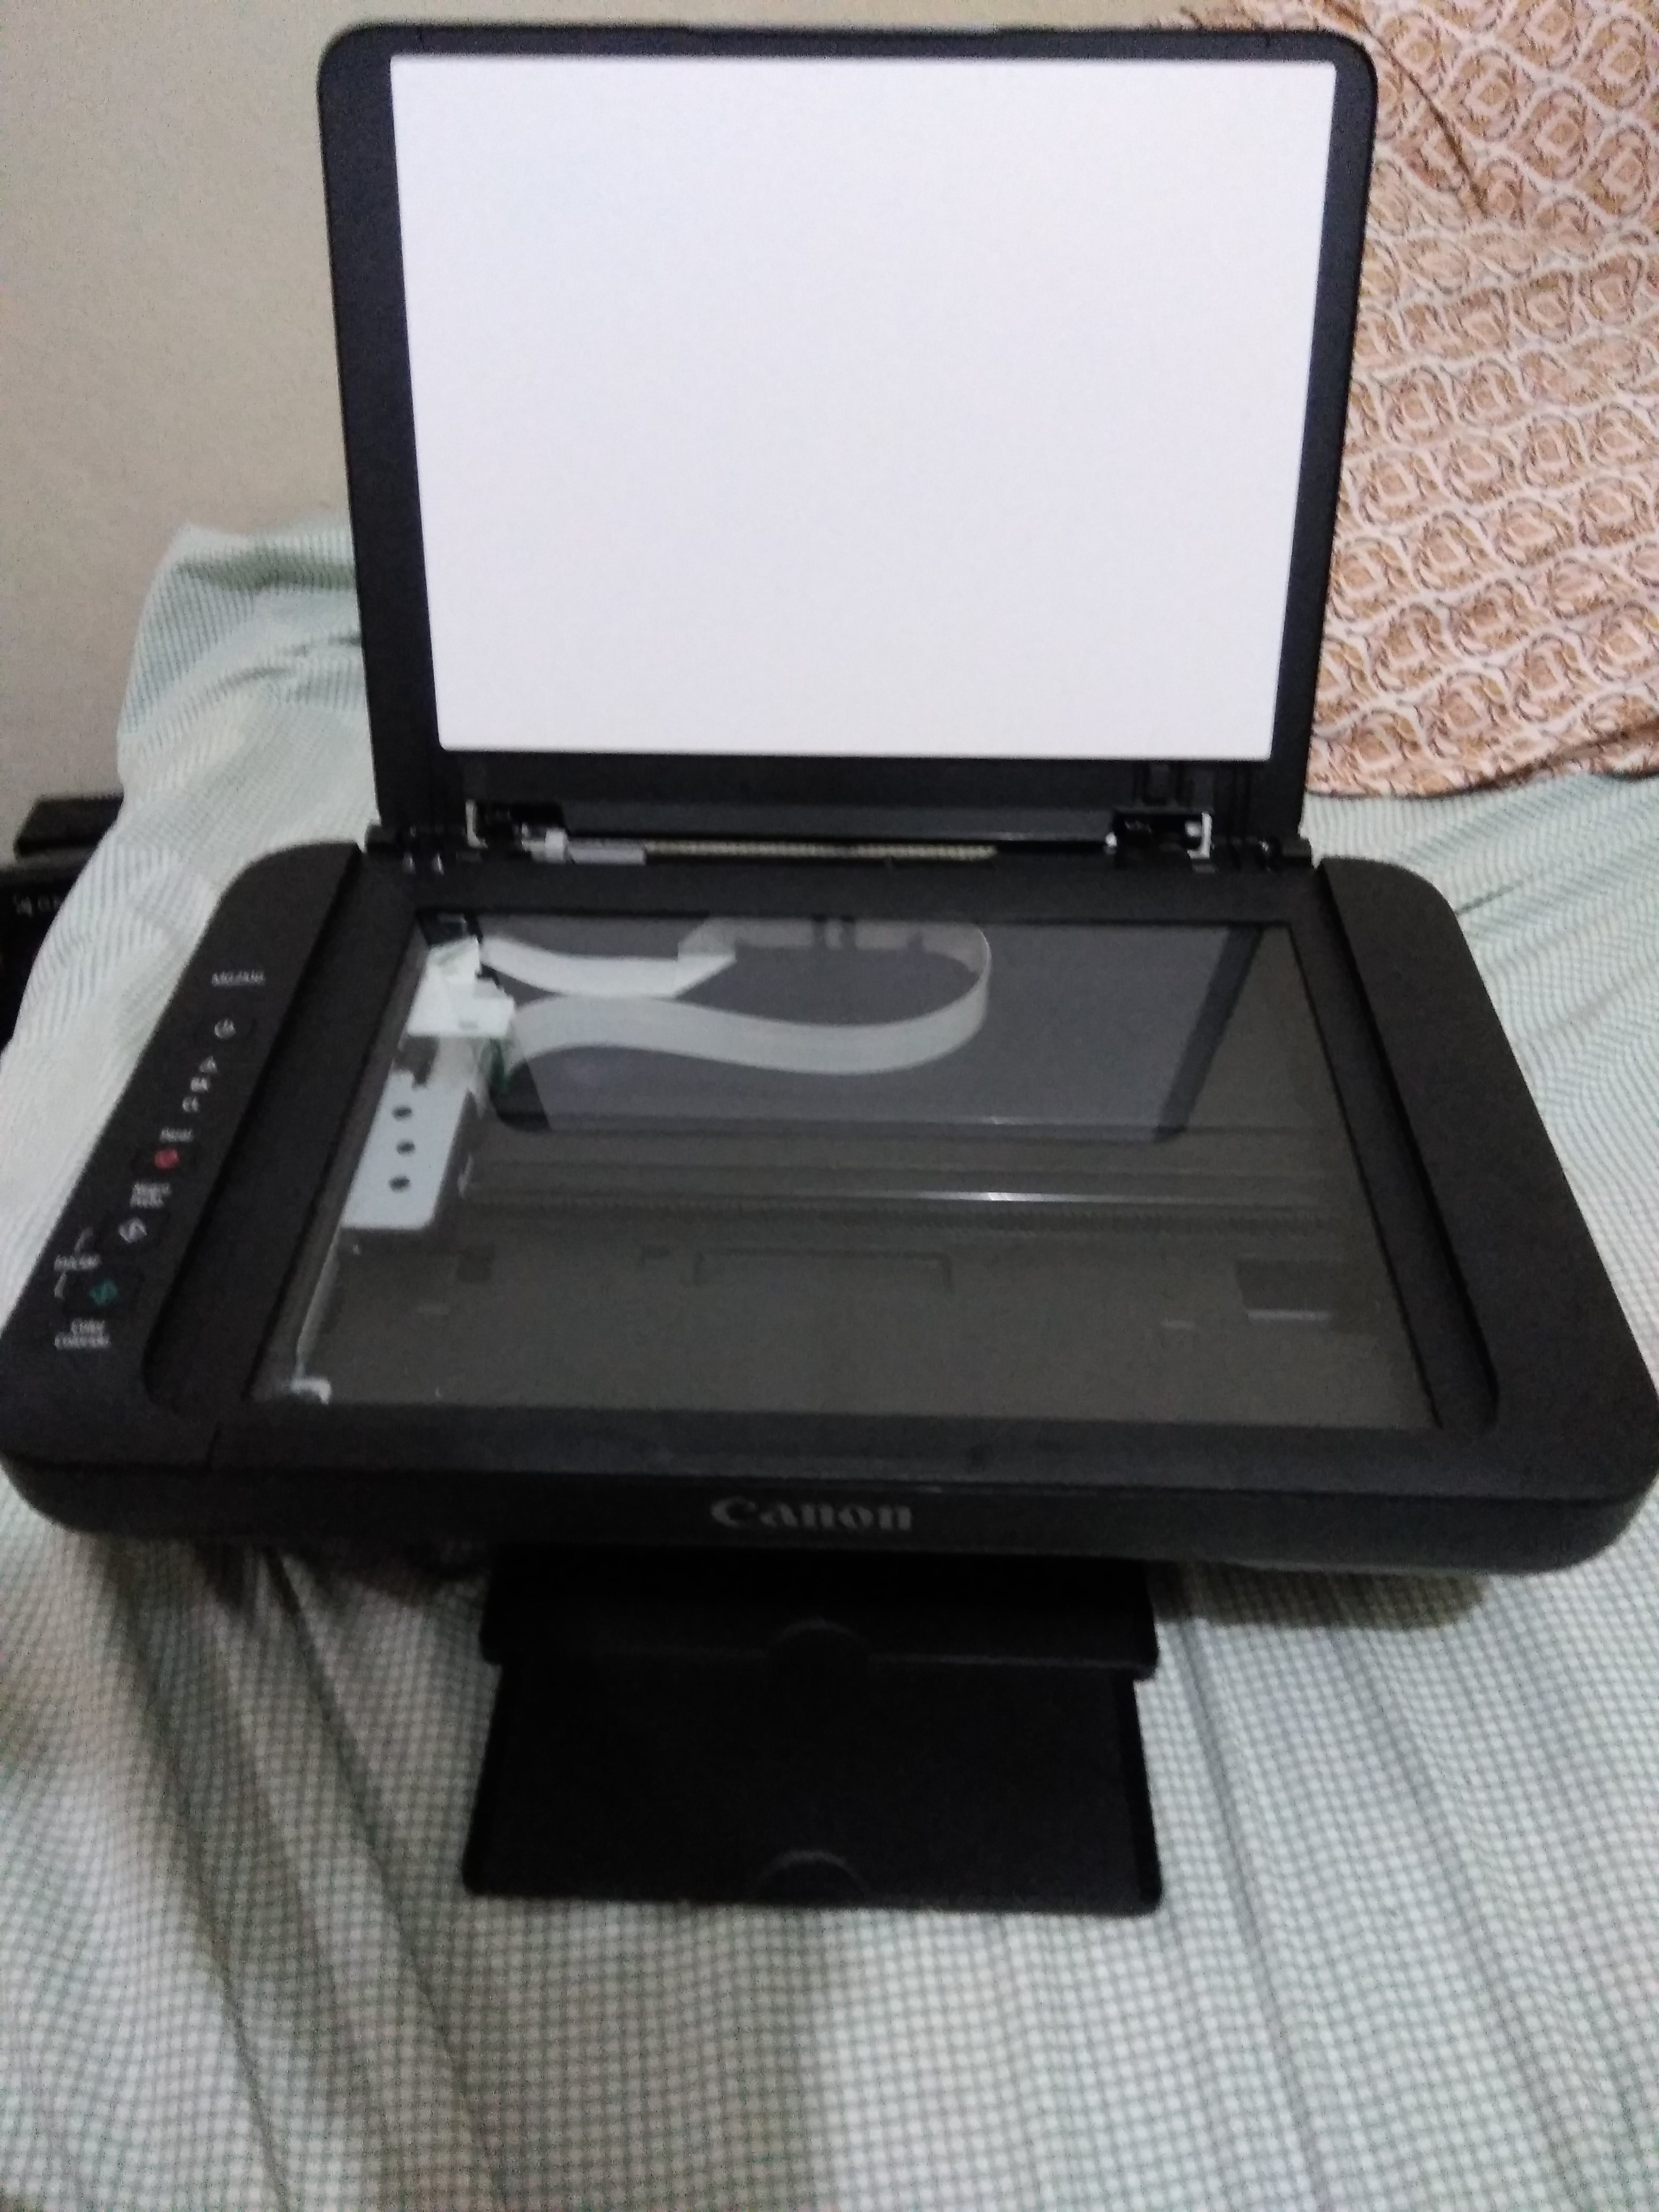 impresoras y scanners - Impresora Canon 